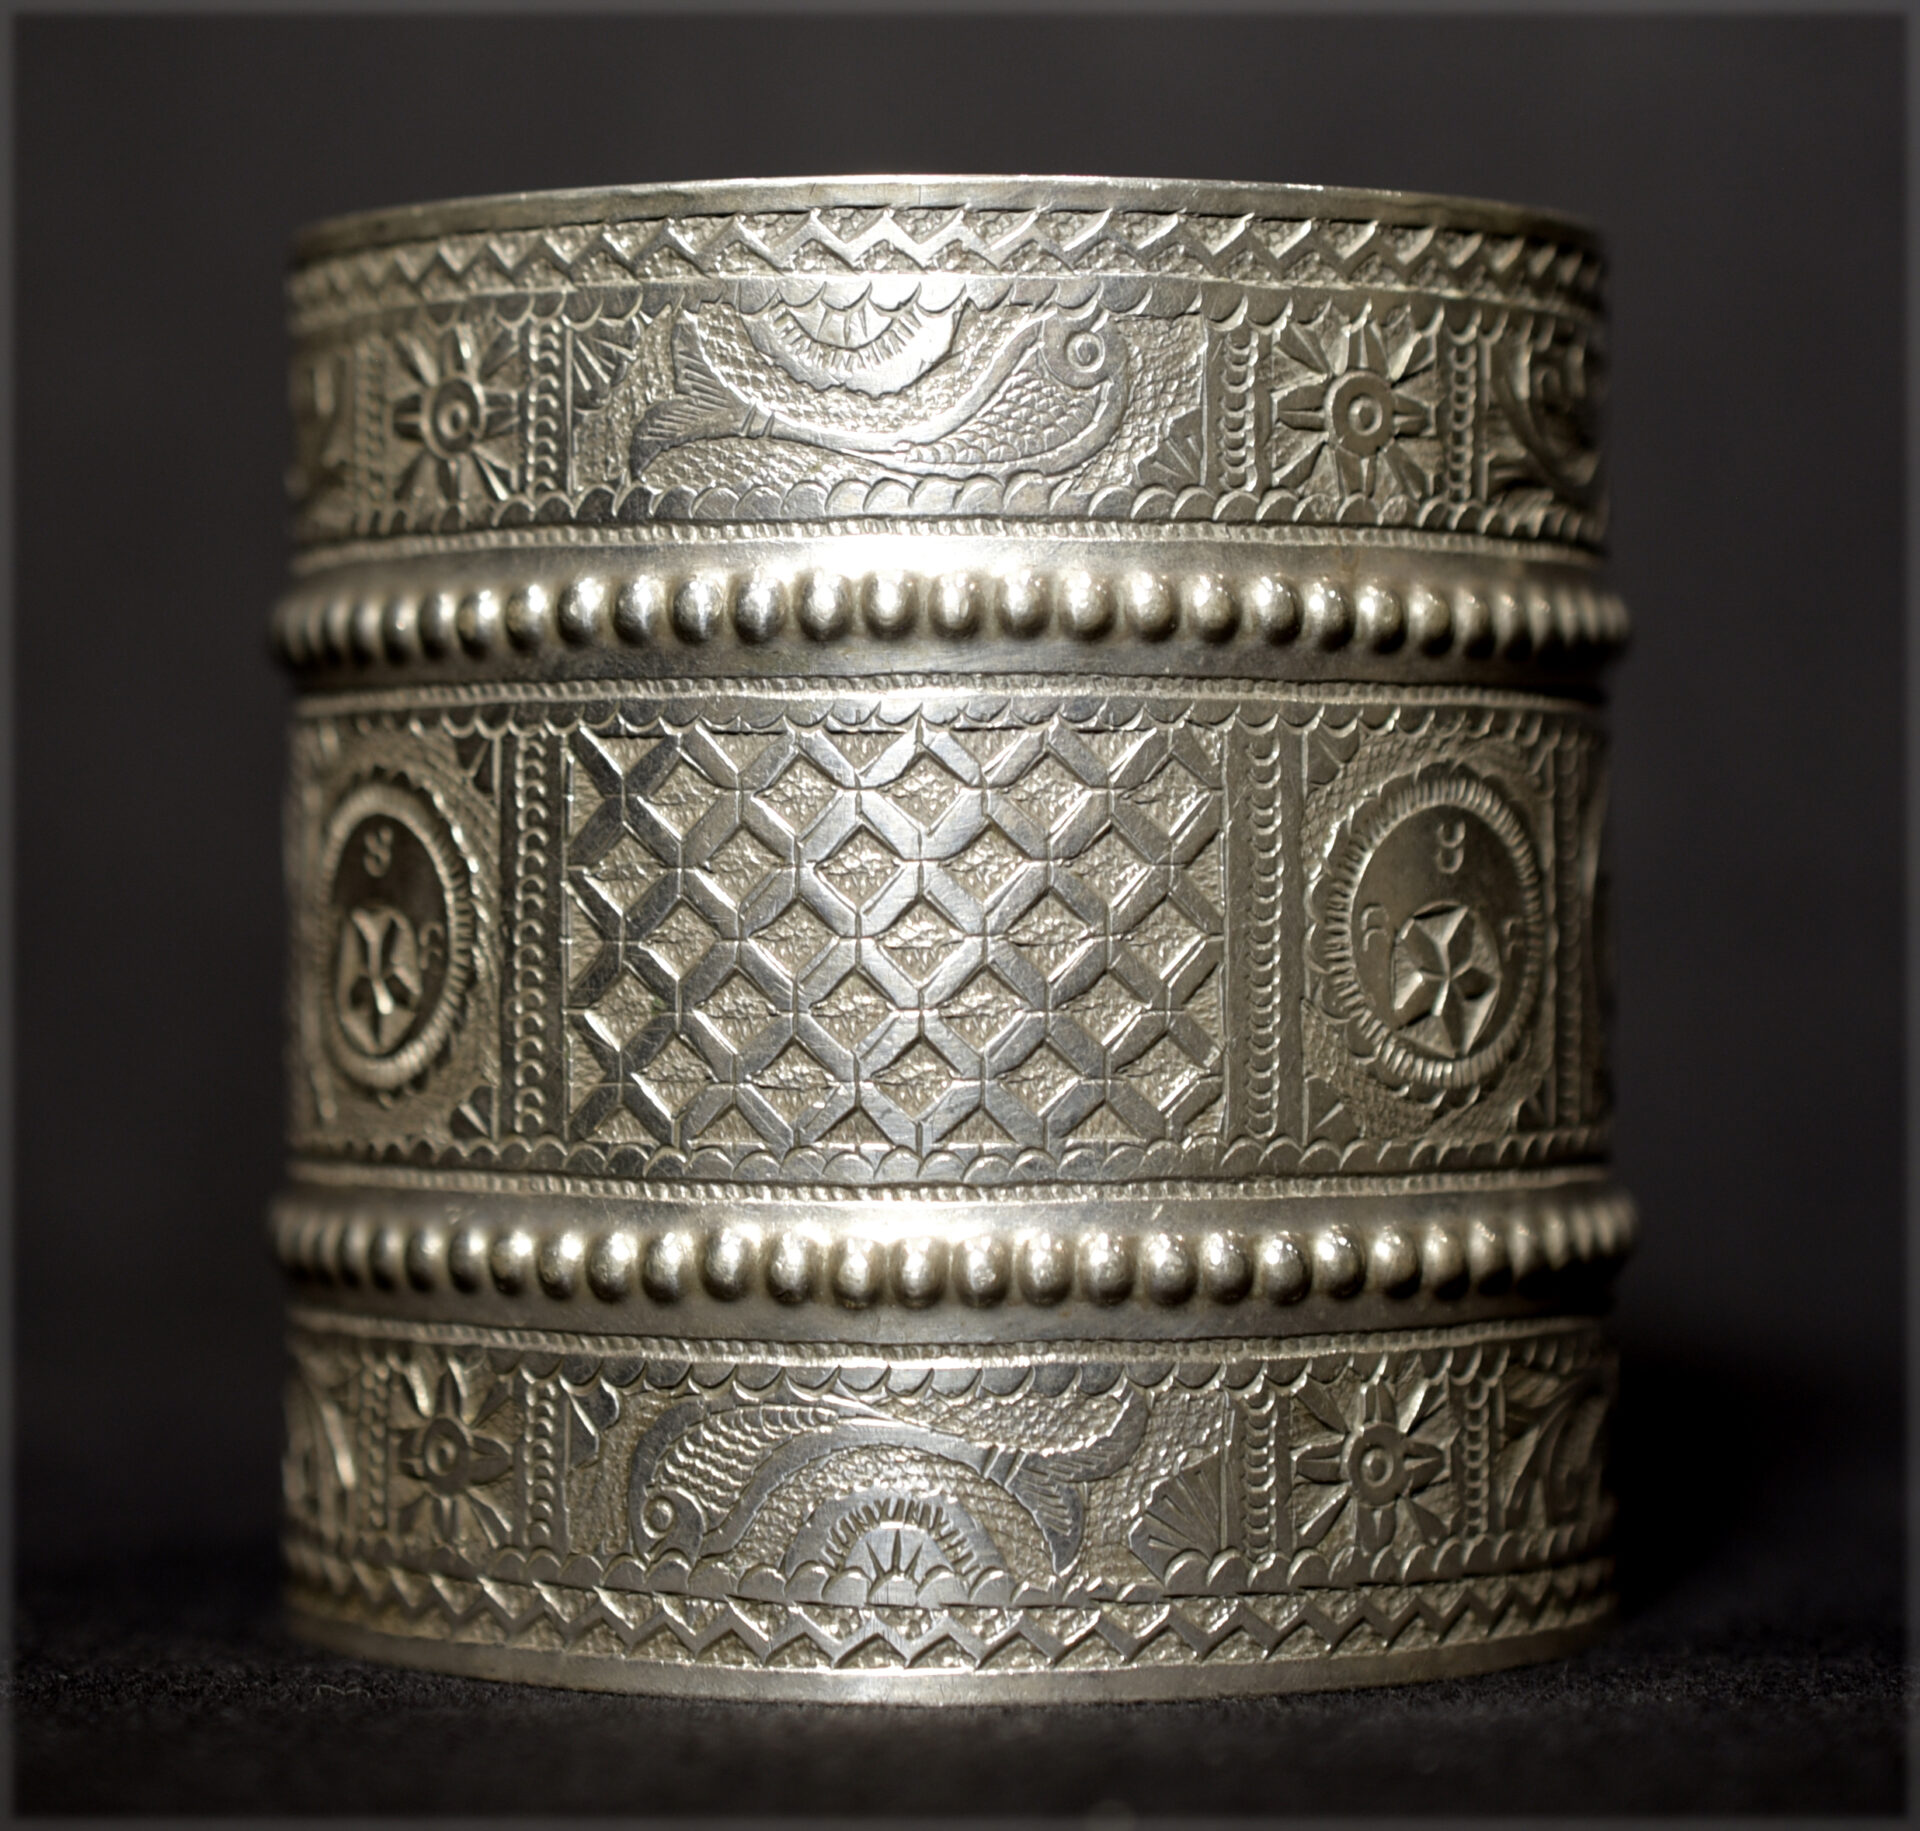 Outstanding Old Berber Bracelet – Tunisia – Beautiful Work